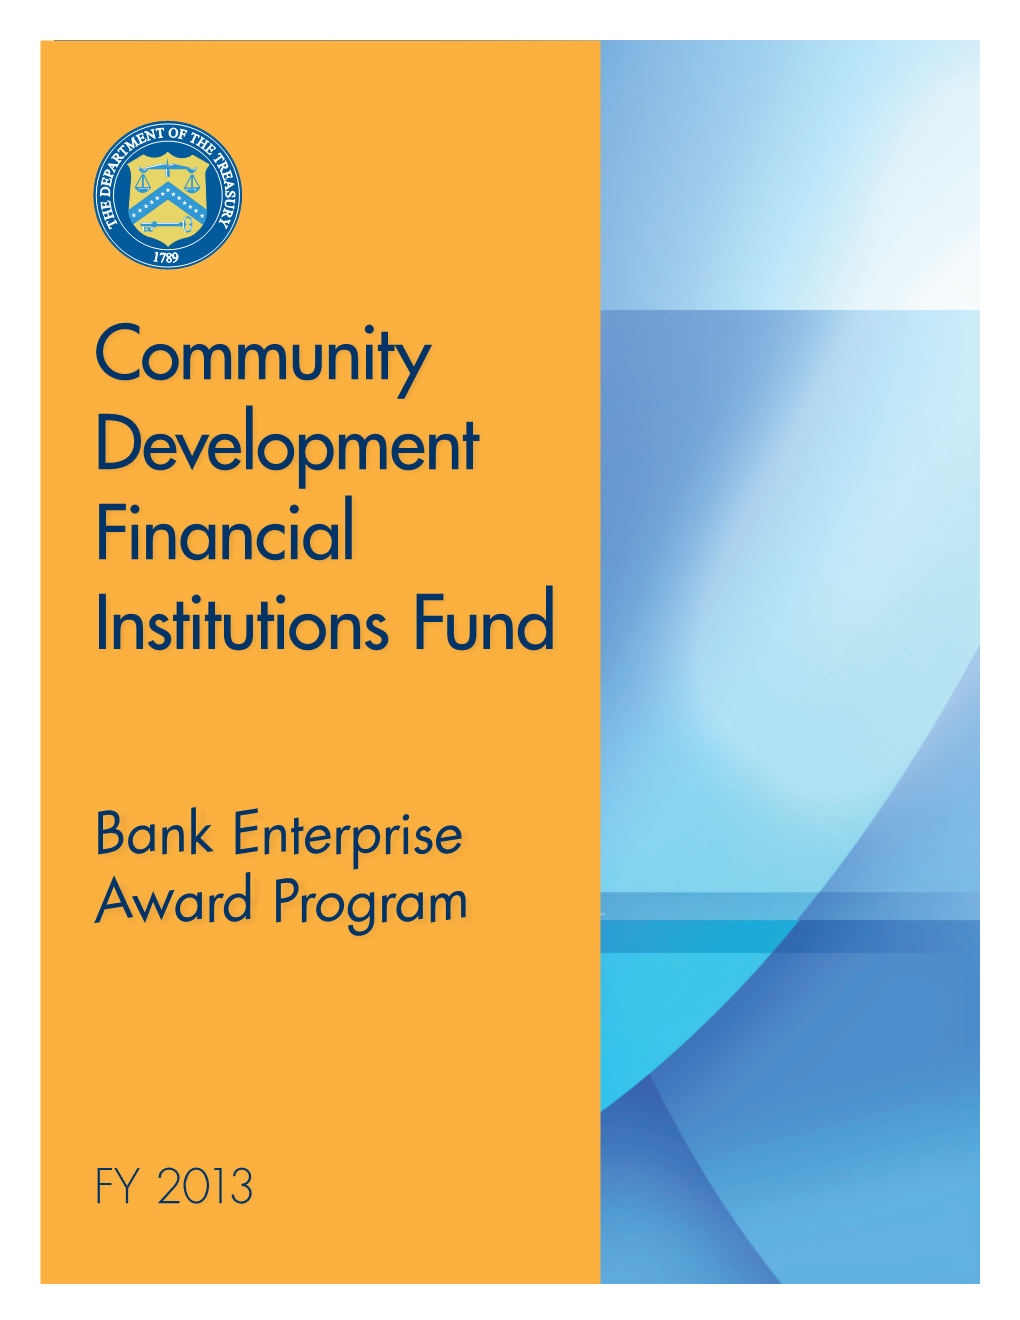 Bank Enterprise Award Program